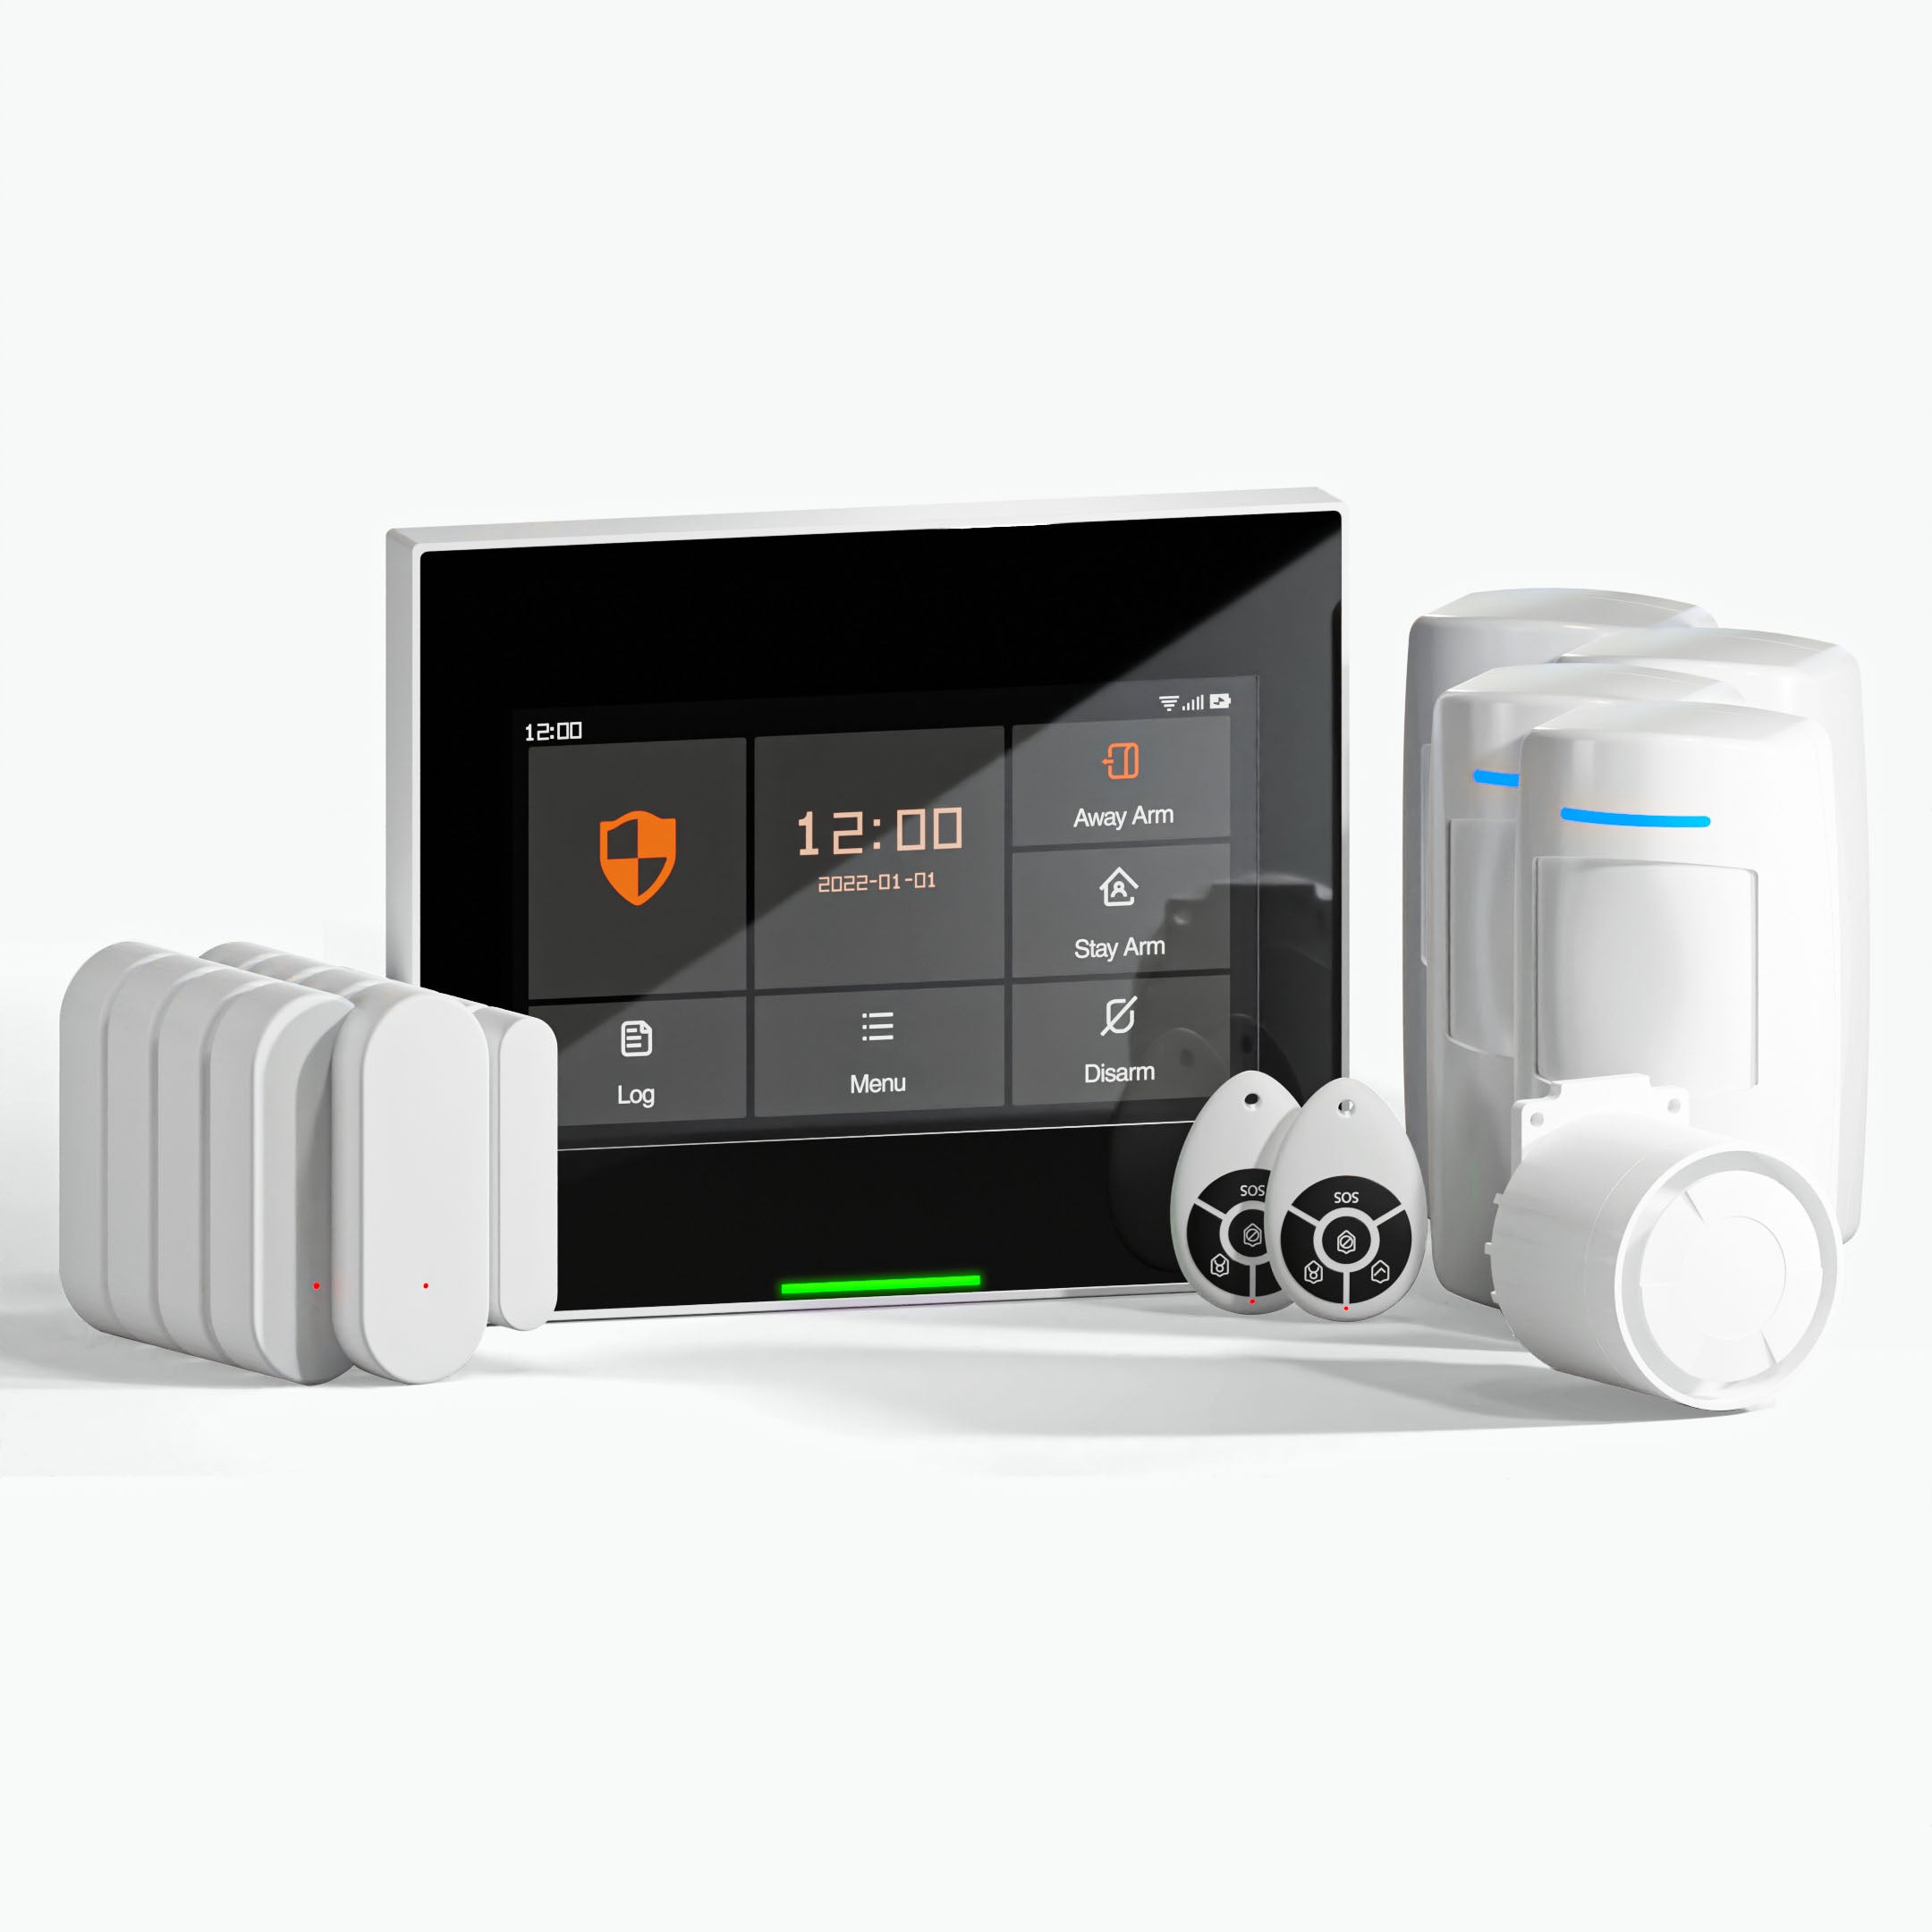 Staniot SecPanel 3 H501 Advanced option PIR Door/window sensor/remote control/siren speaker on a white background